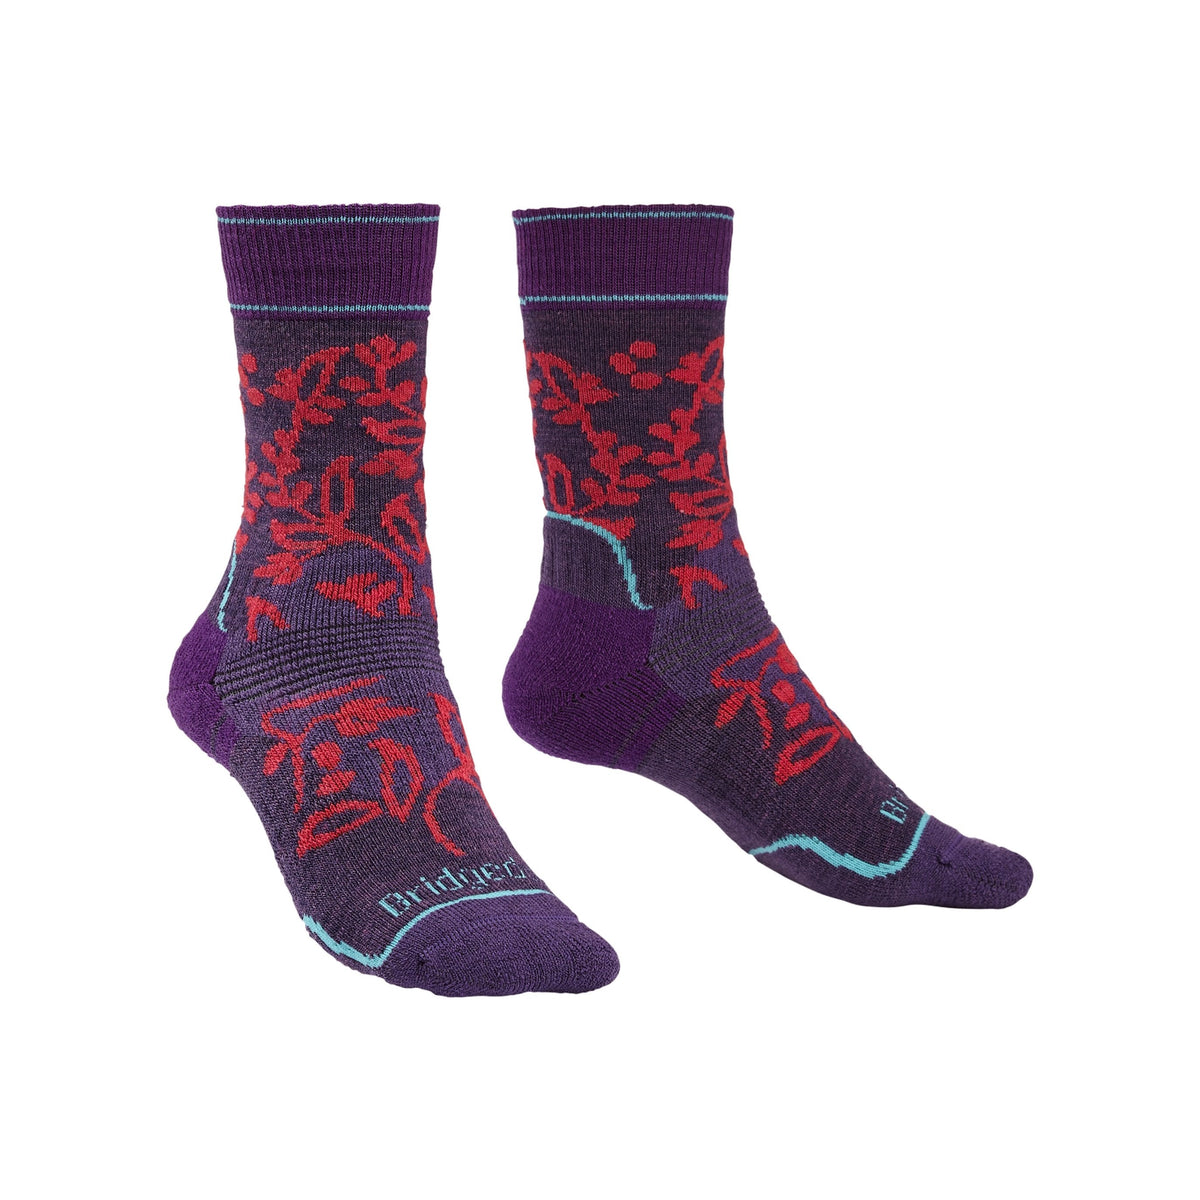 Bridgedale Hike Midweight Performance Boot Socks (Women's) - Pink Pattern - Find Your Feet Australia Hobart Launceston Tasmania